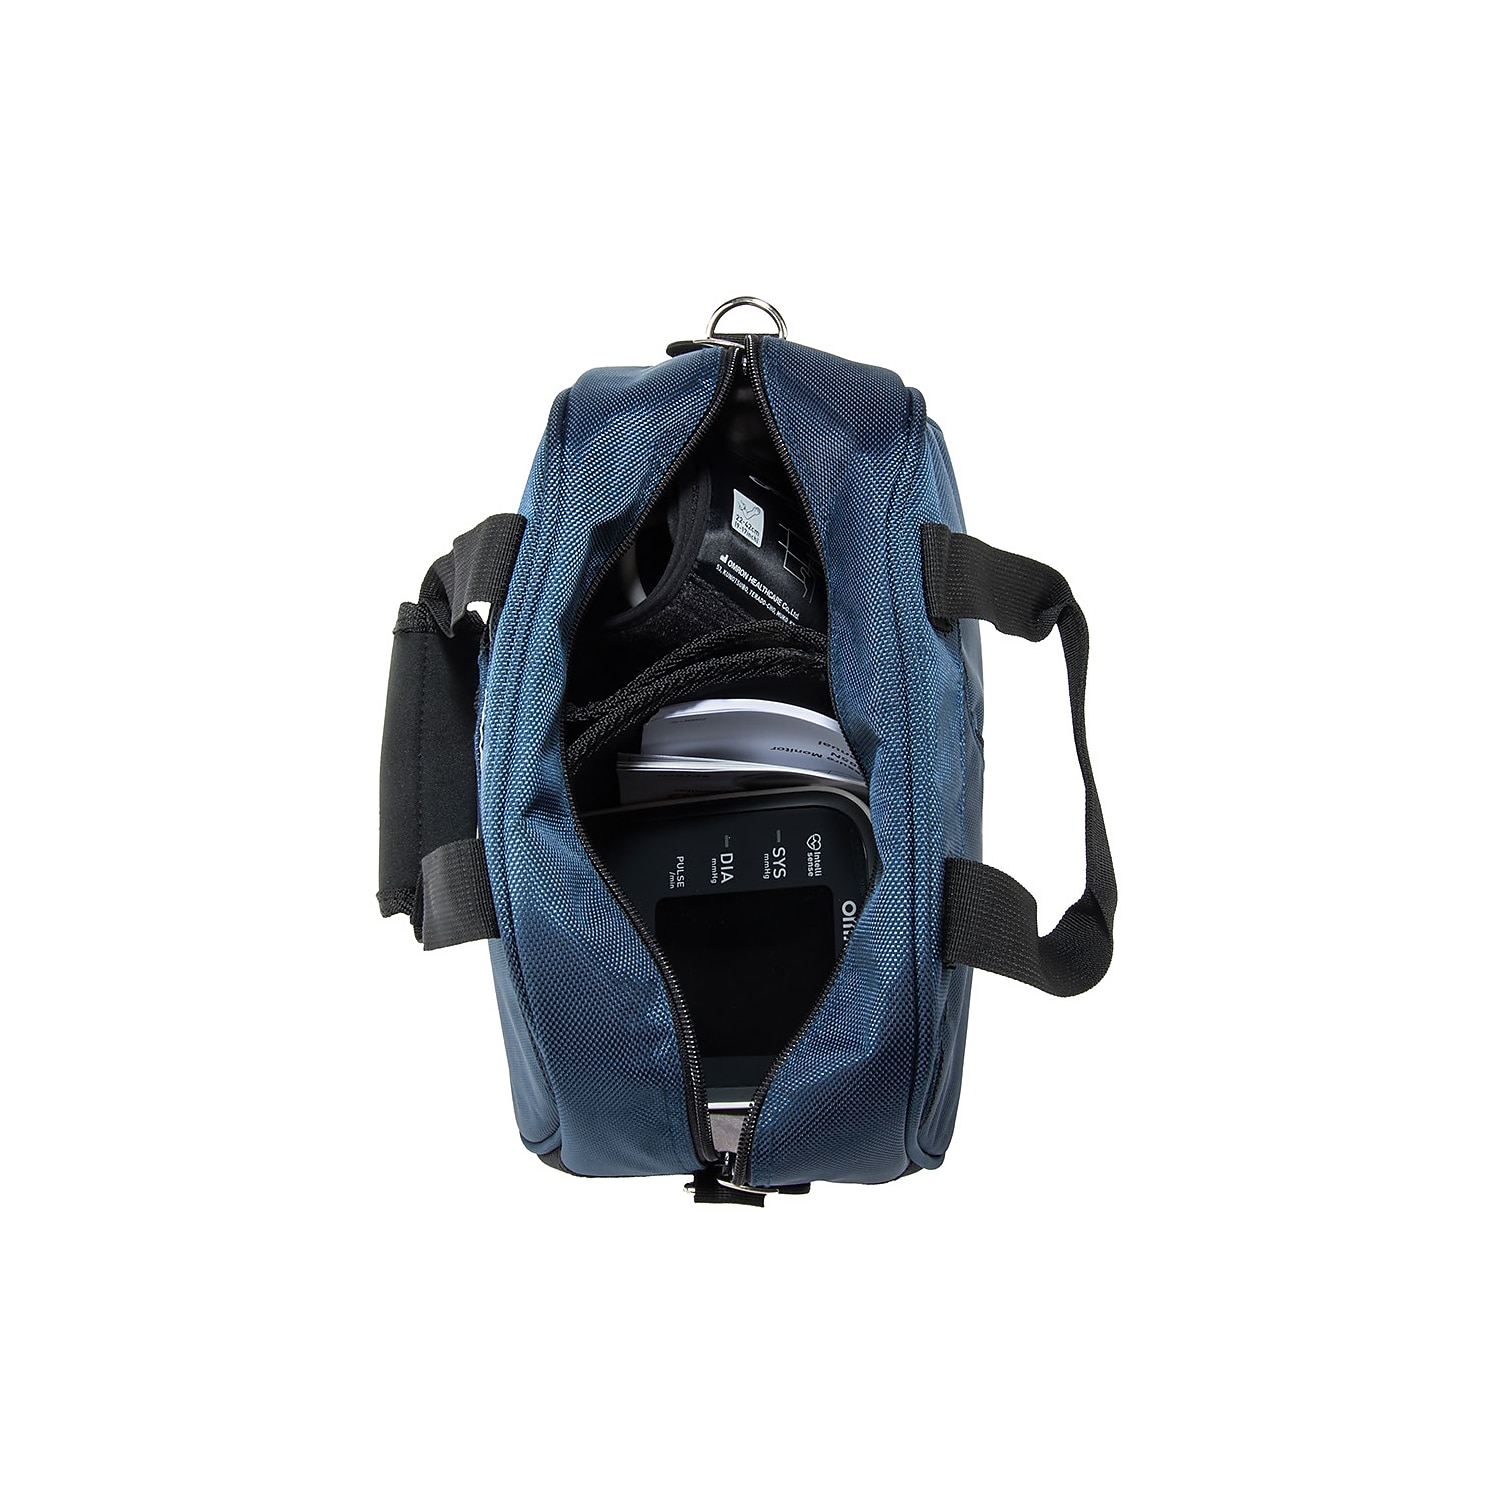 VANGODDY Mithra Camera Over the Shoulder Case Handbag fits DSLR and SLR Cameras [Canon, Nikon, Samsung, Sony, Olympus, etc.] - image 3 of 6